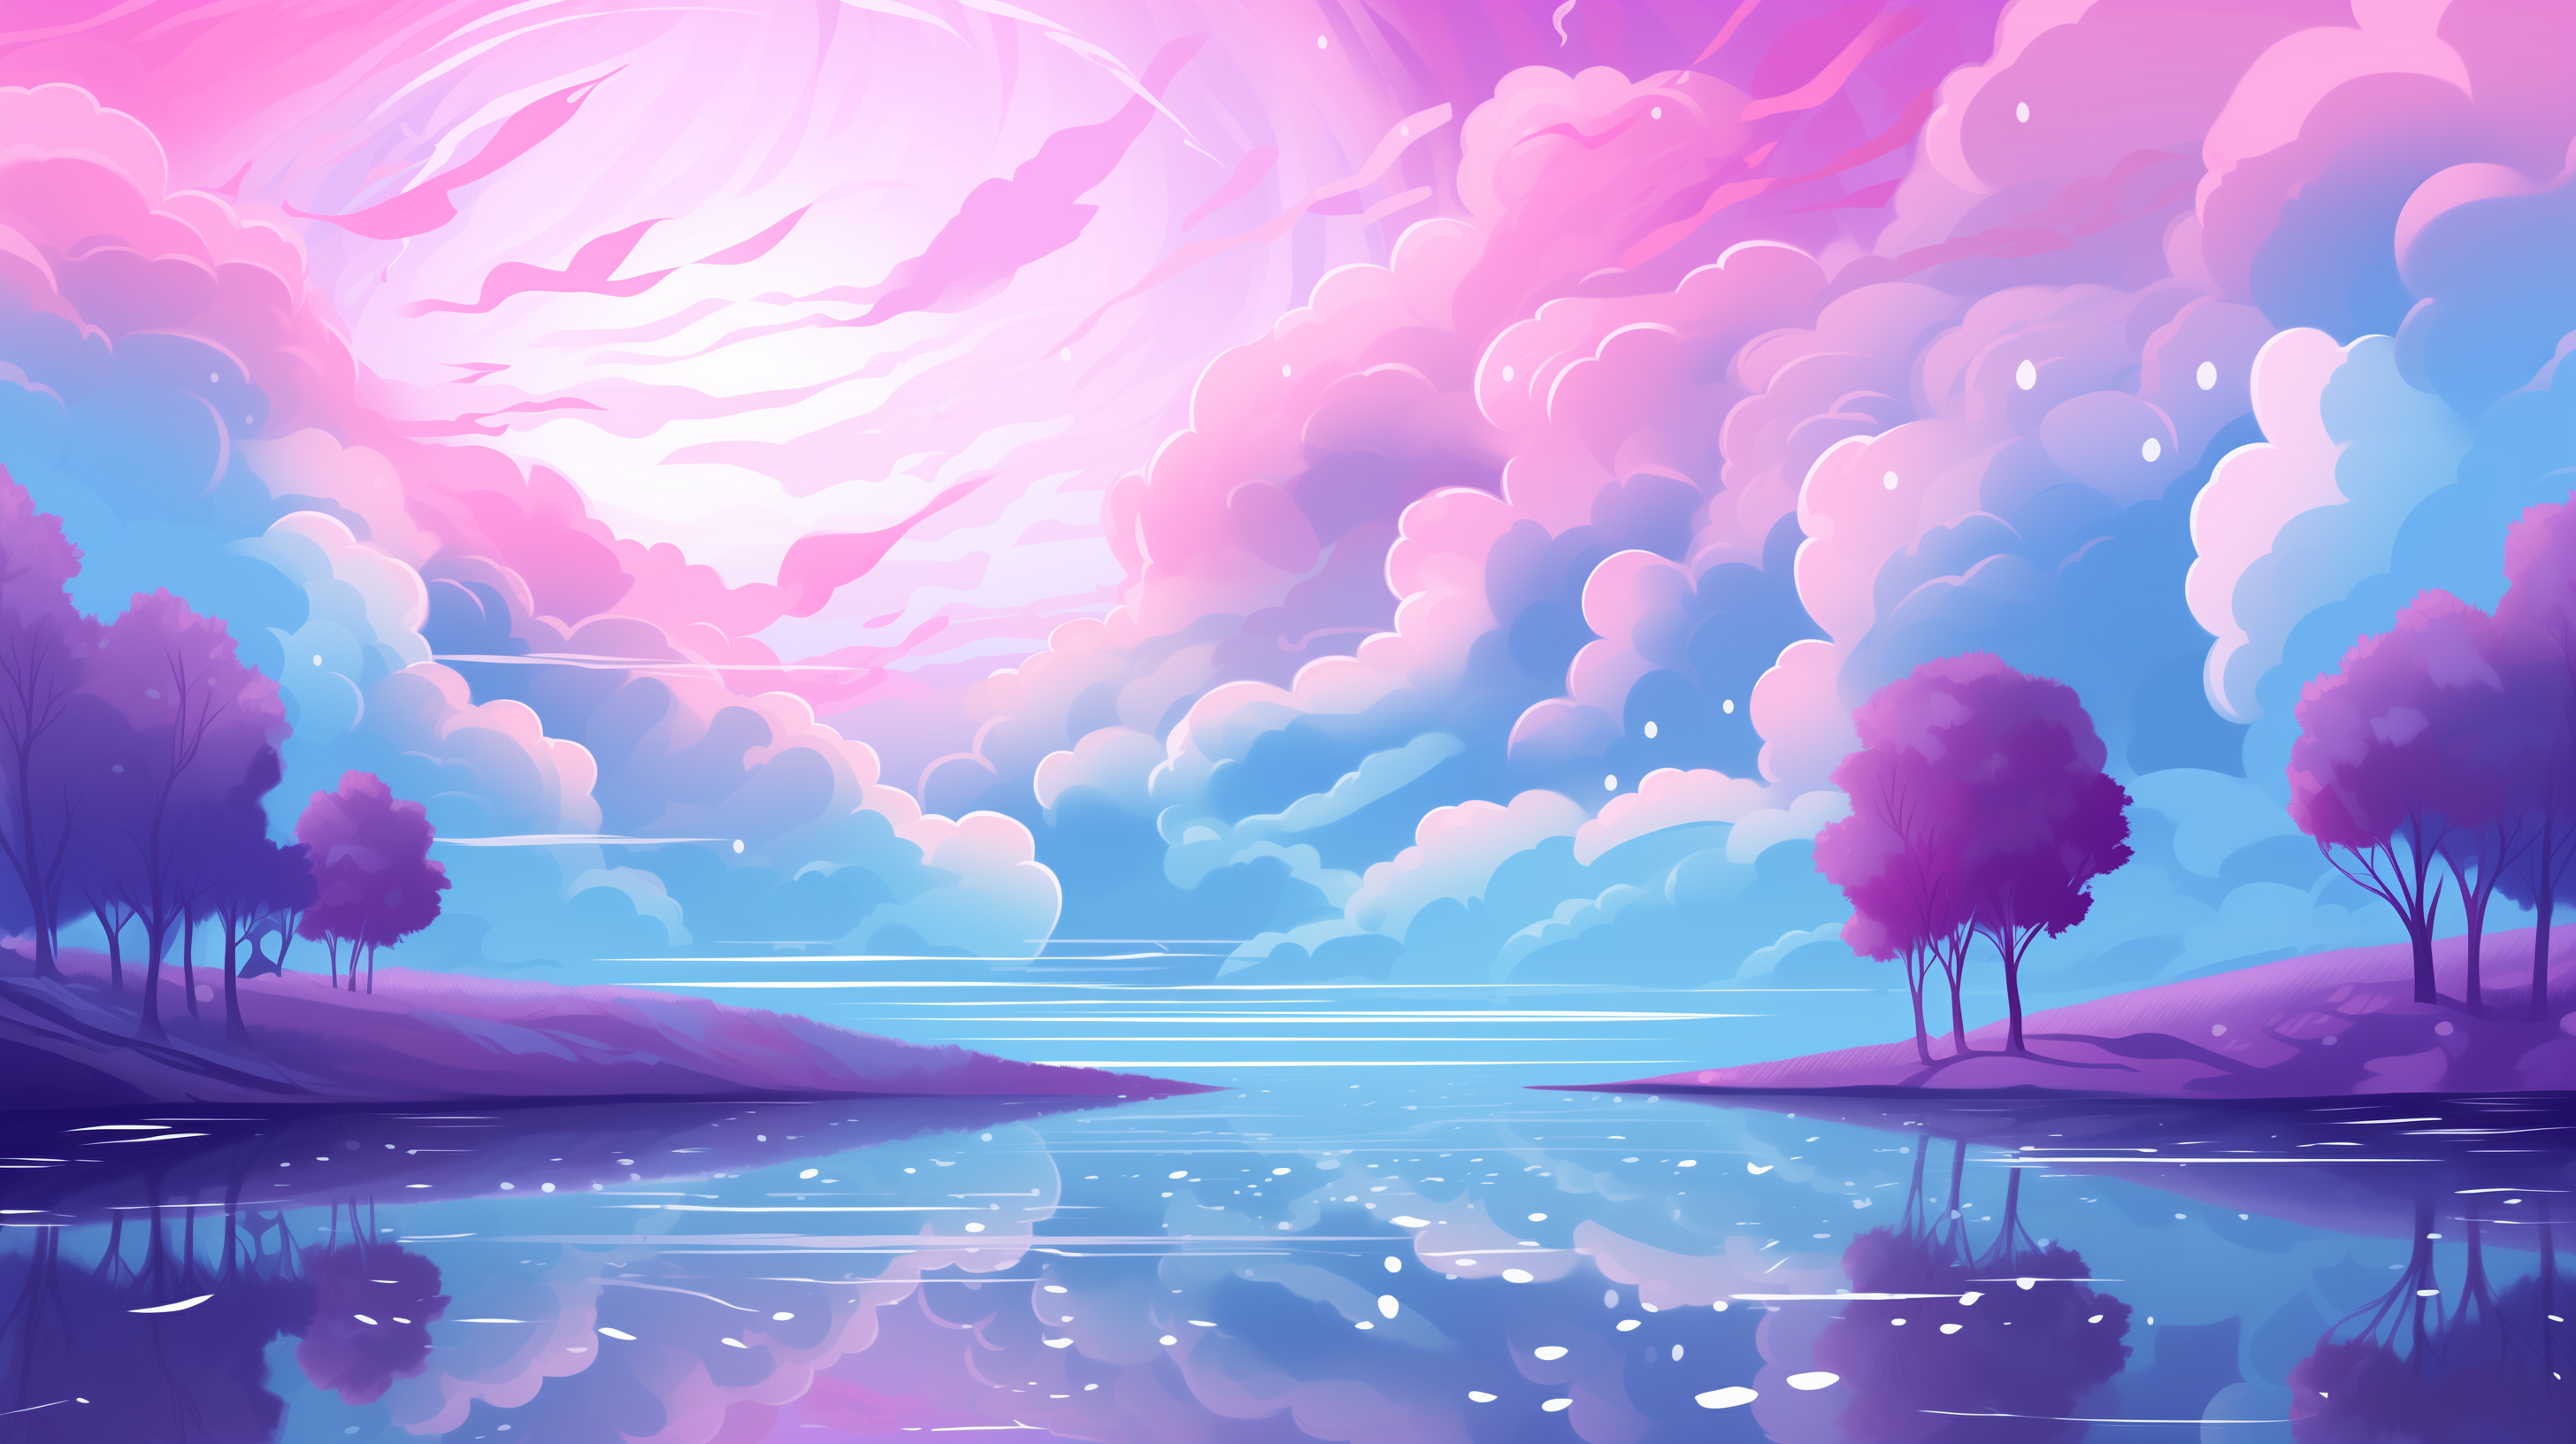 General 2912x1632 AI art landscape purple background lake trees reflection sky clouds digital art water sunlight